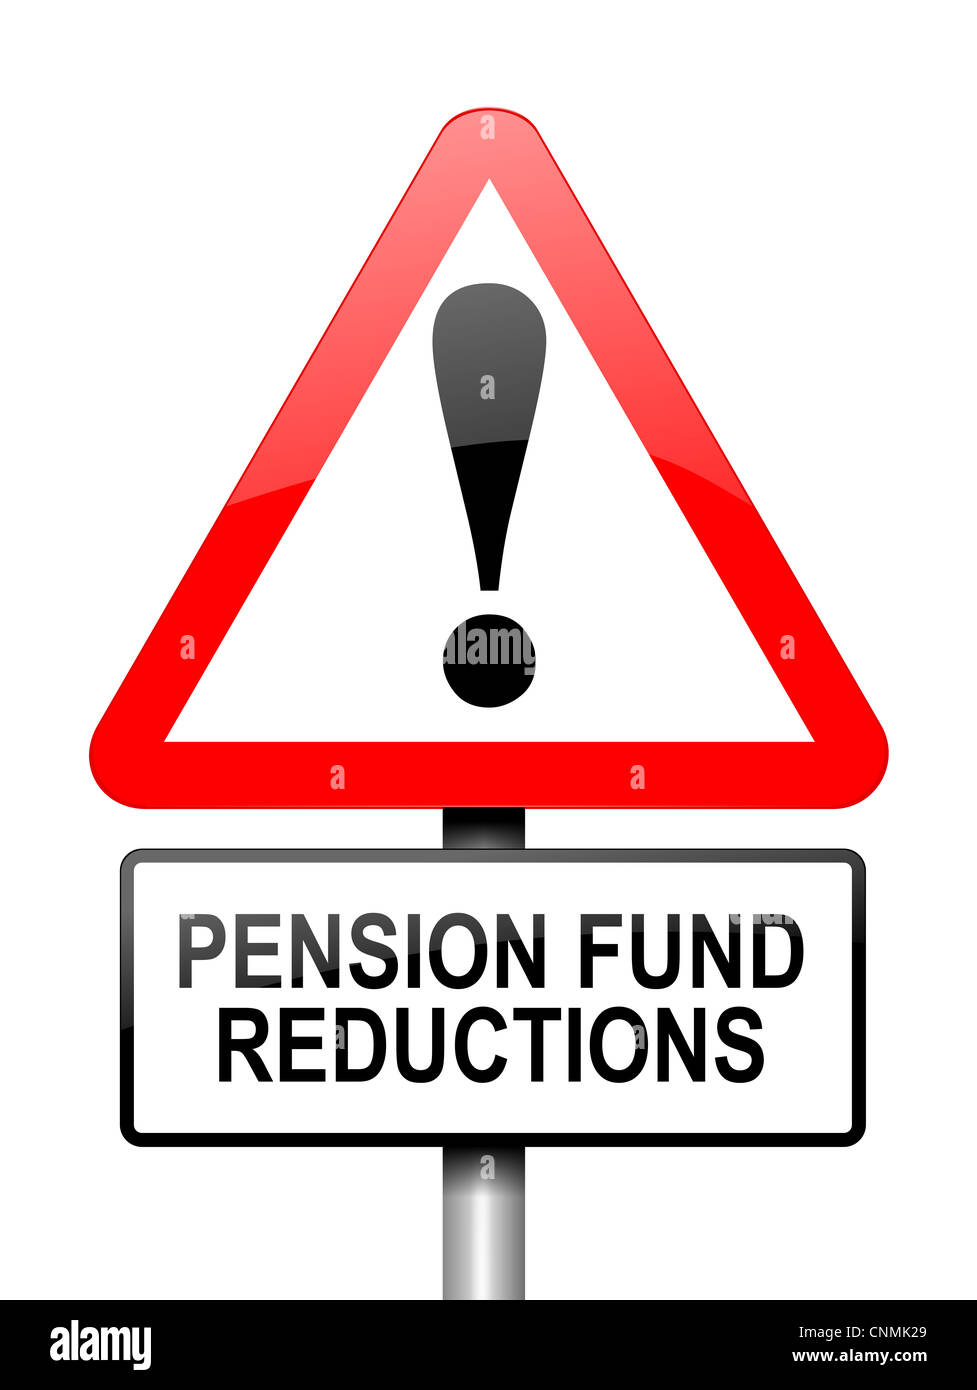 Pension fund alert. Stock Photo